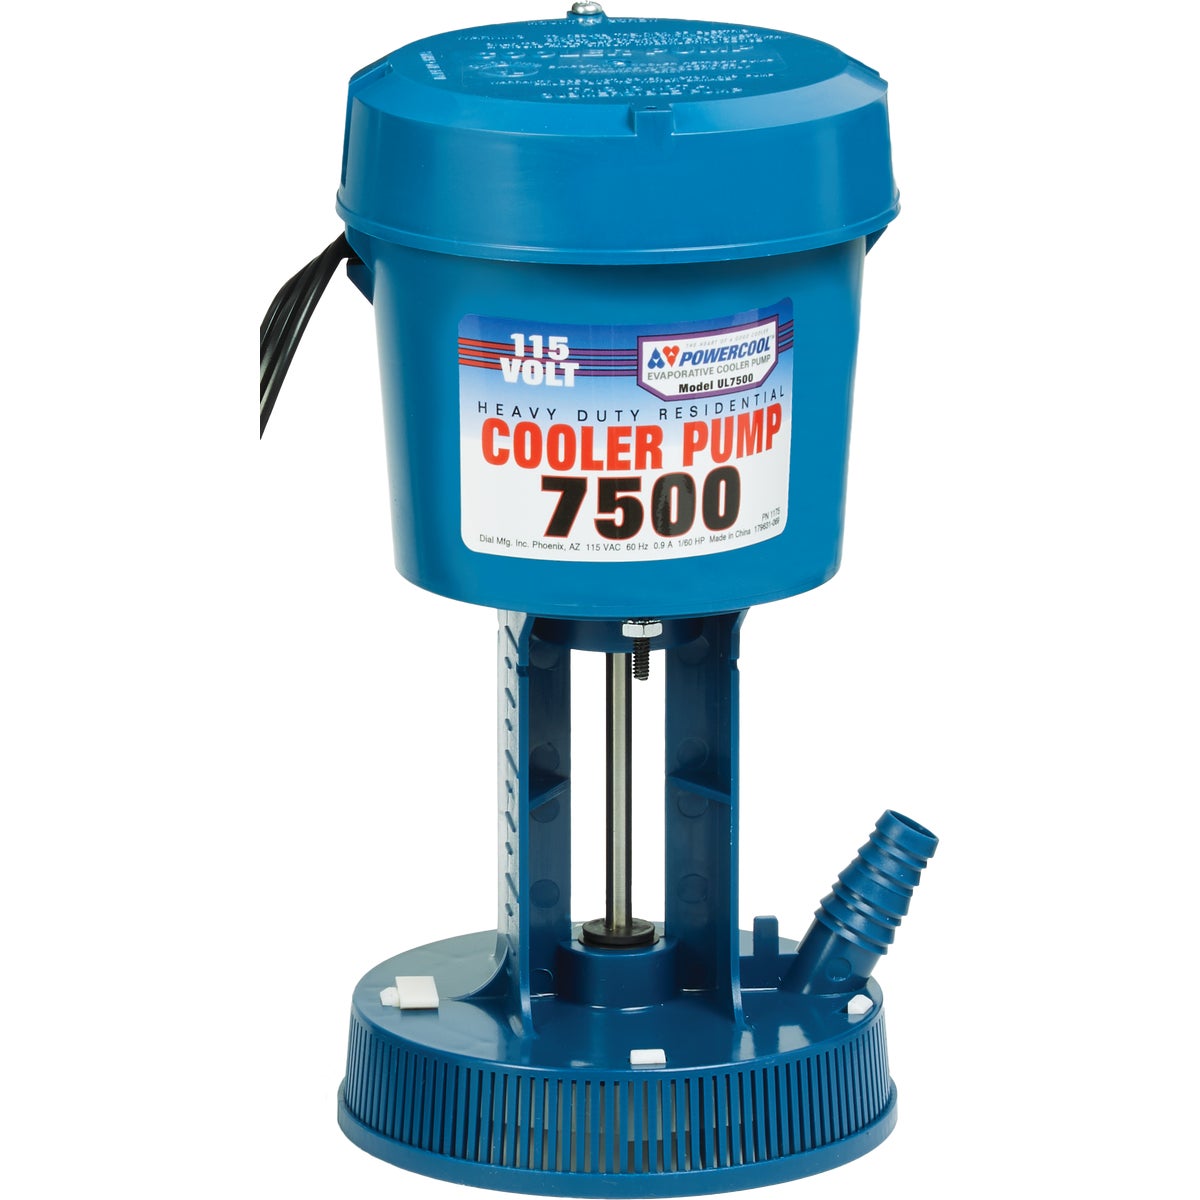 Dial 115V 7500 CFM/360 GPH Premium Evaporative Cooler Pump